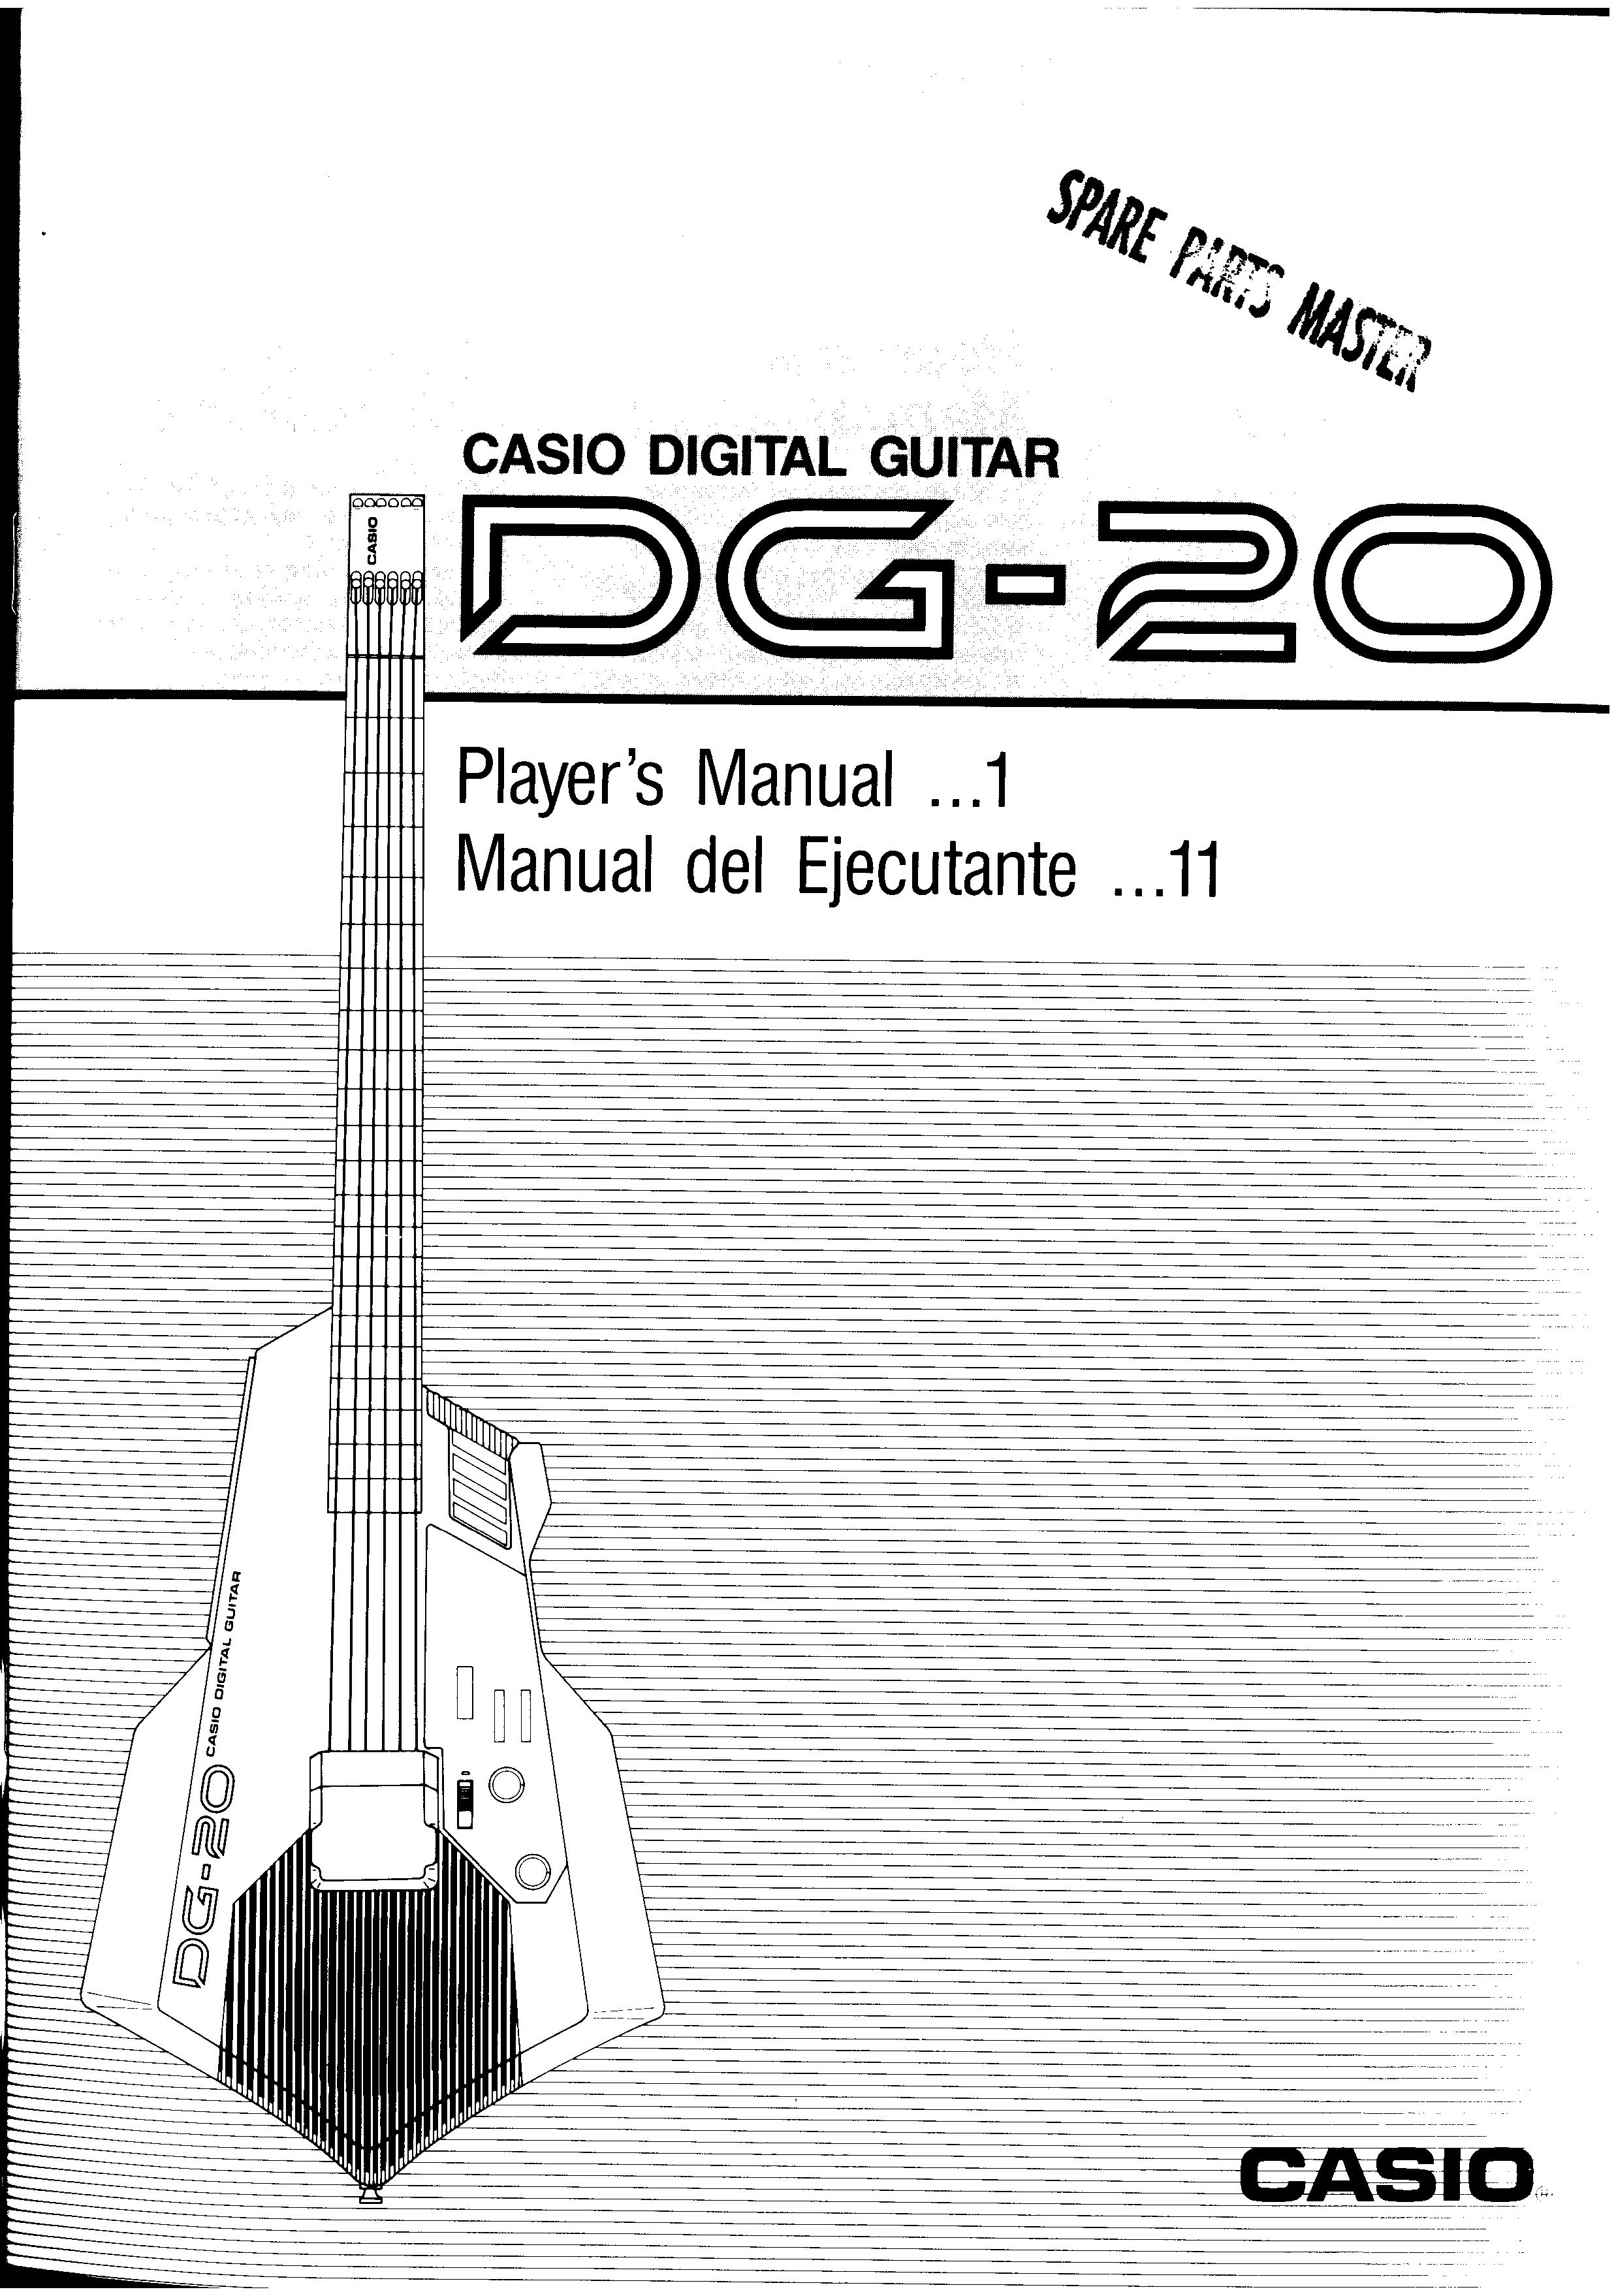 Casio DG-20 Guitar User Manual